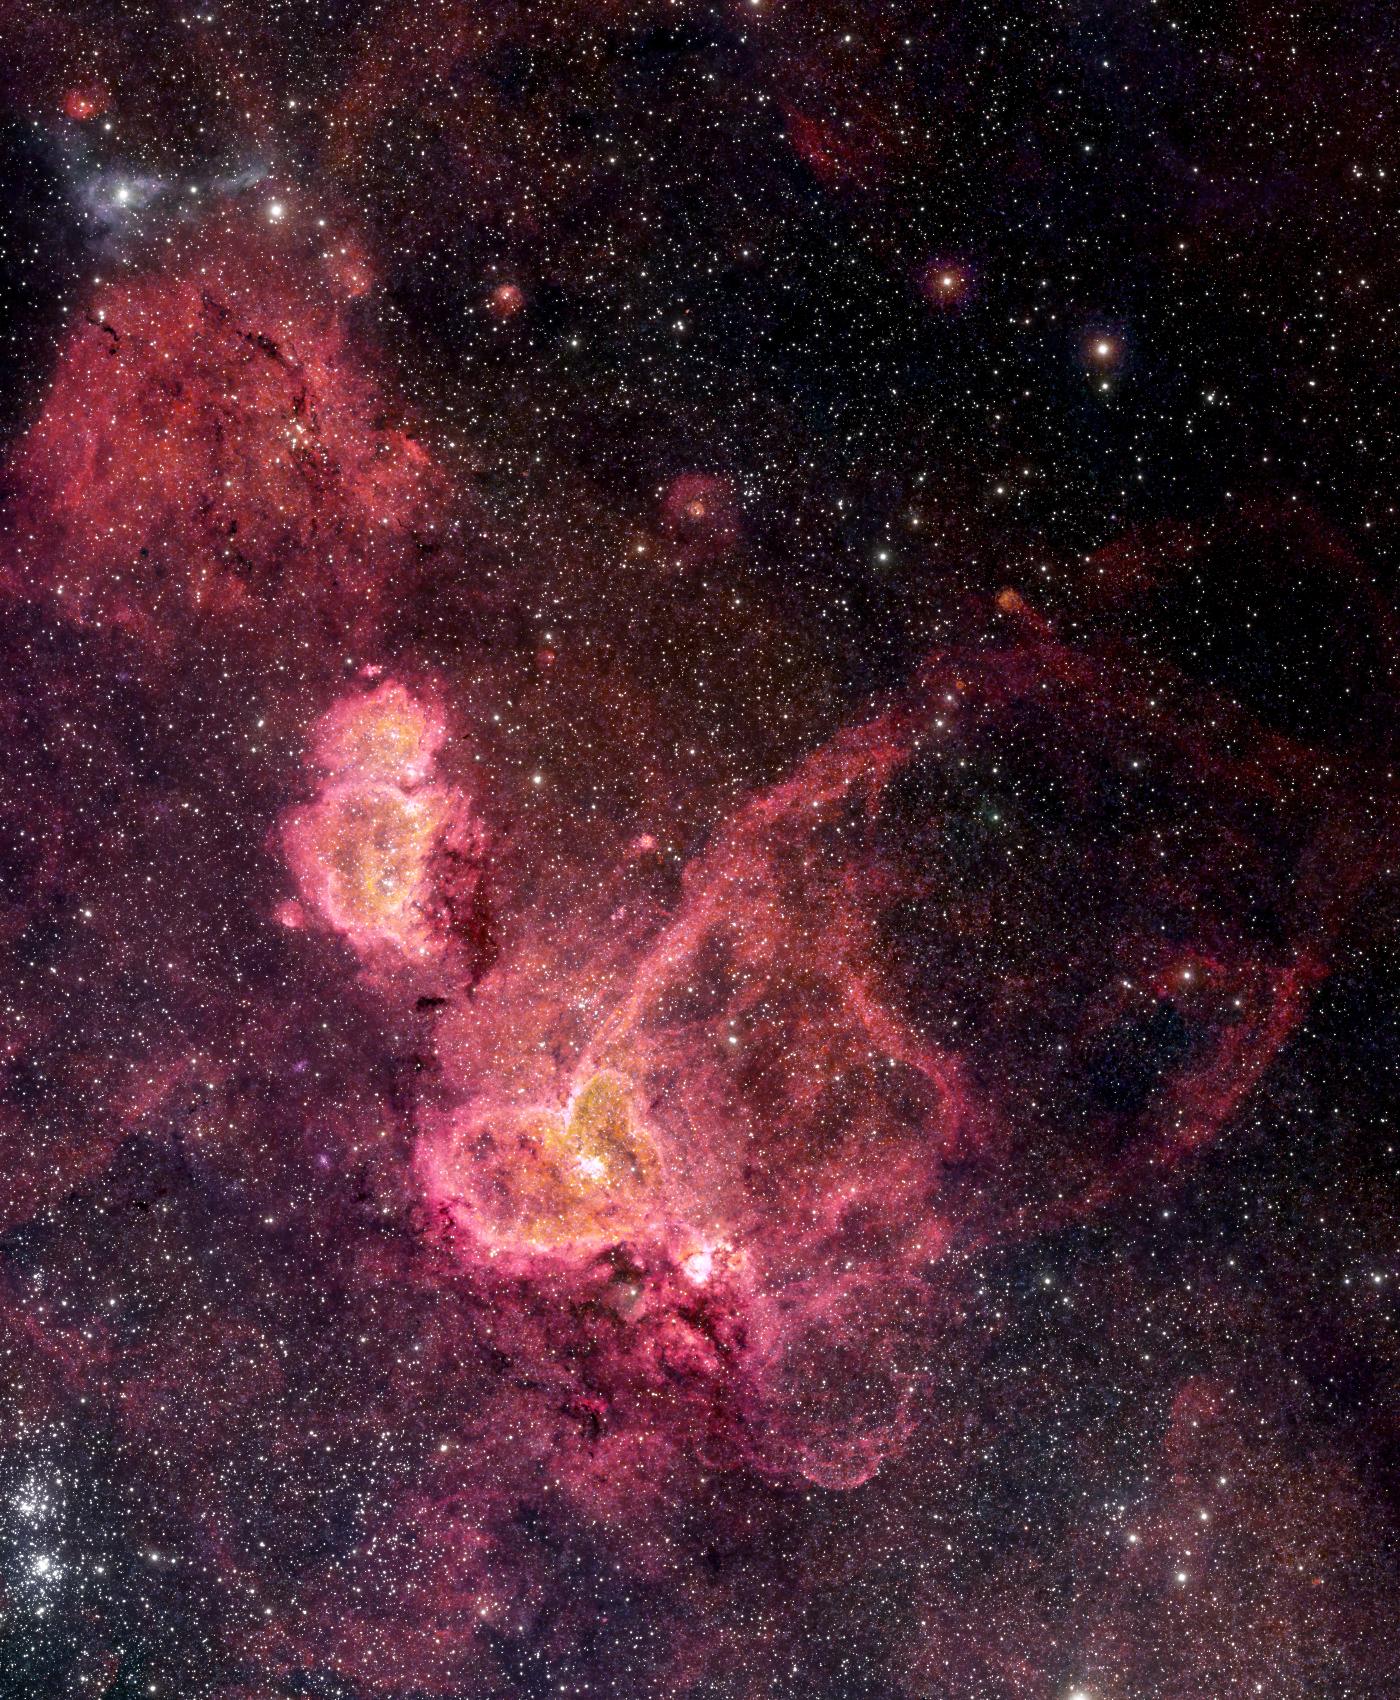 Man emission nebulae (including SH2-202, SH2-199 and SH2-190) and the reflection nebulae LBN 681, LBN 682 and LBN 684 SH2-131